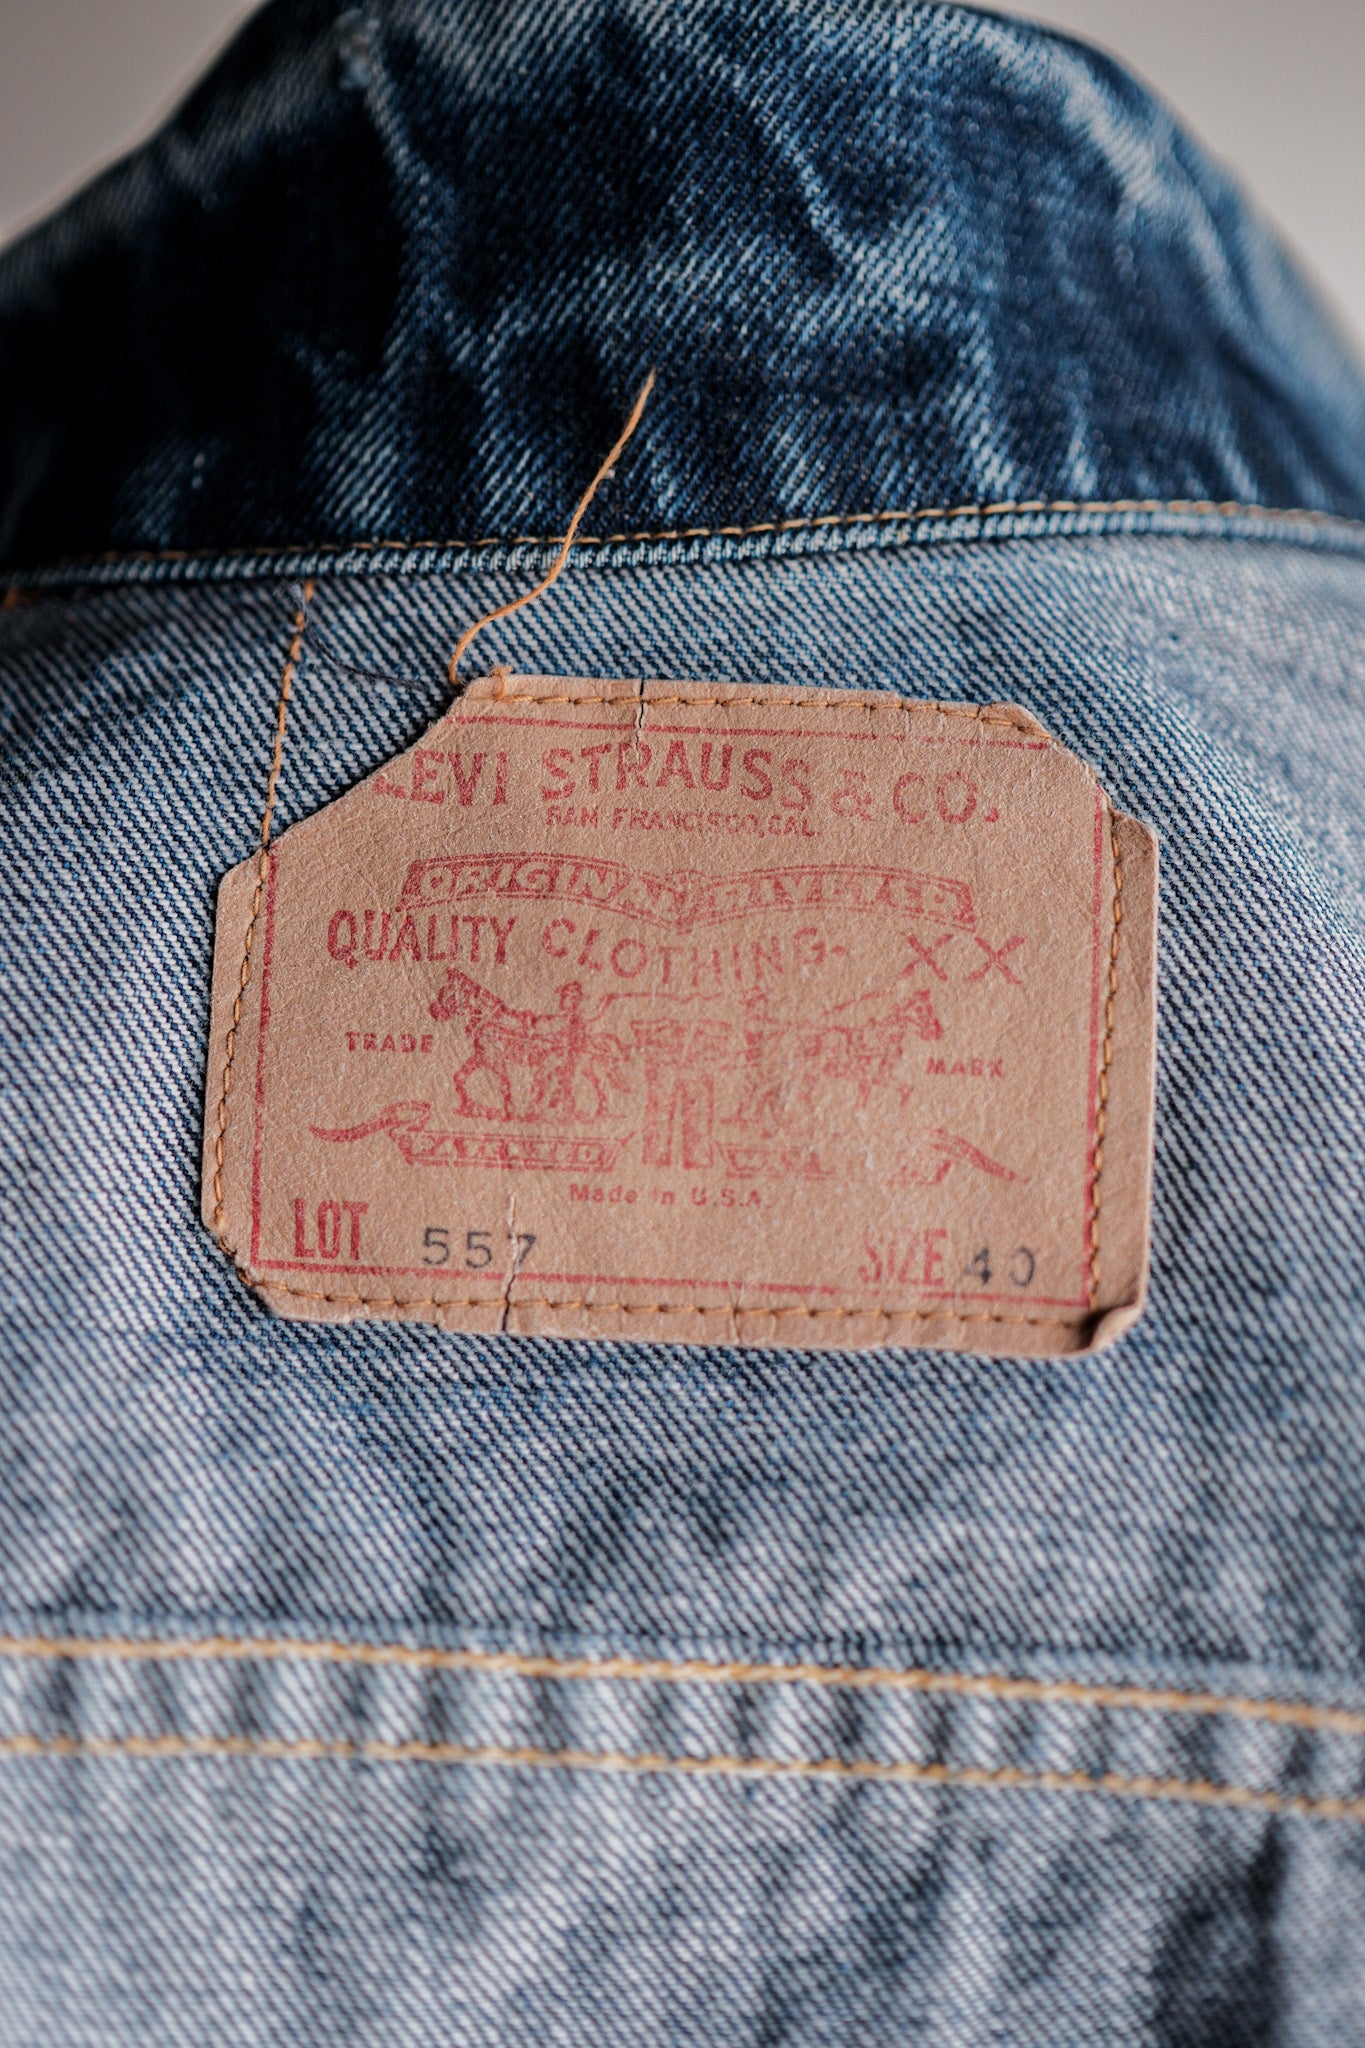 【~60's】Vintage Levi's 557 Denim Jacket Size.40 "Big E"